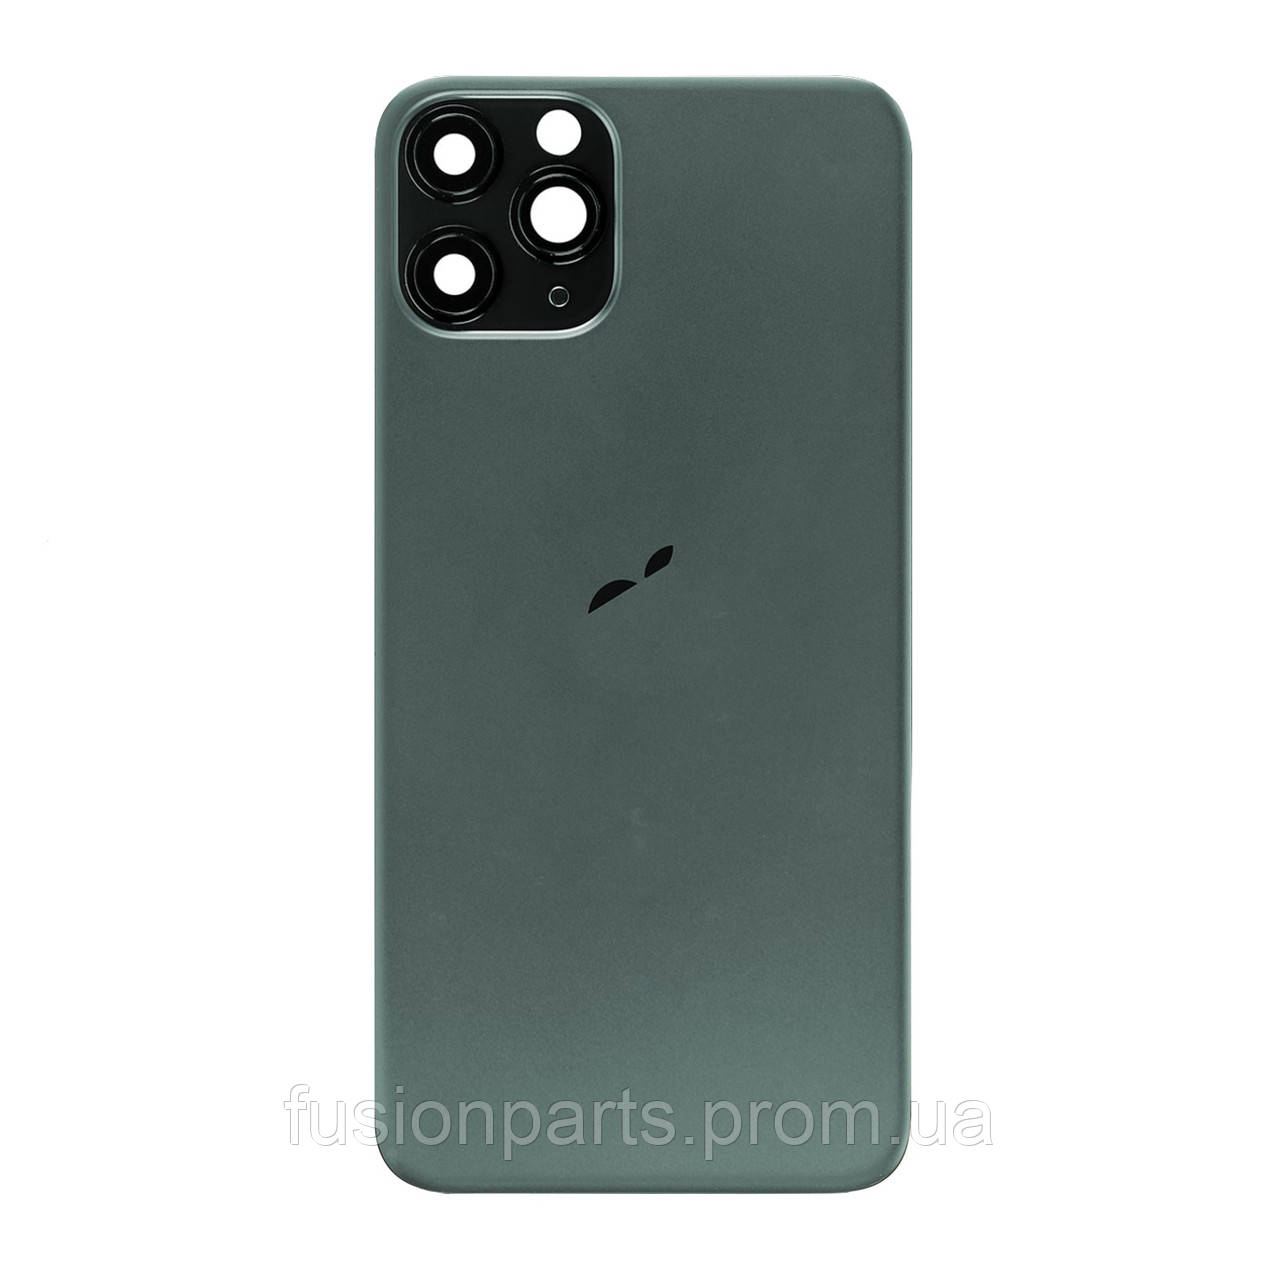 Задняя крышка iPhone 11 Pro (с стеклом камеры) Midnight Green